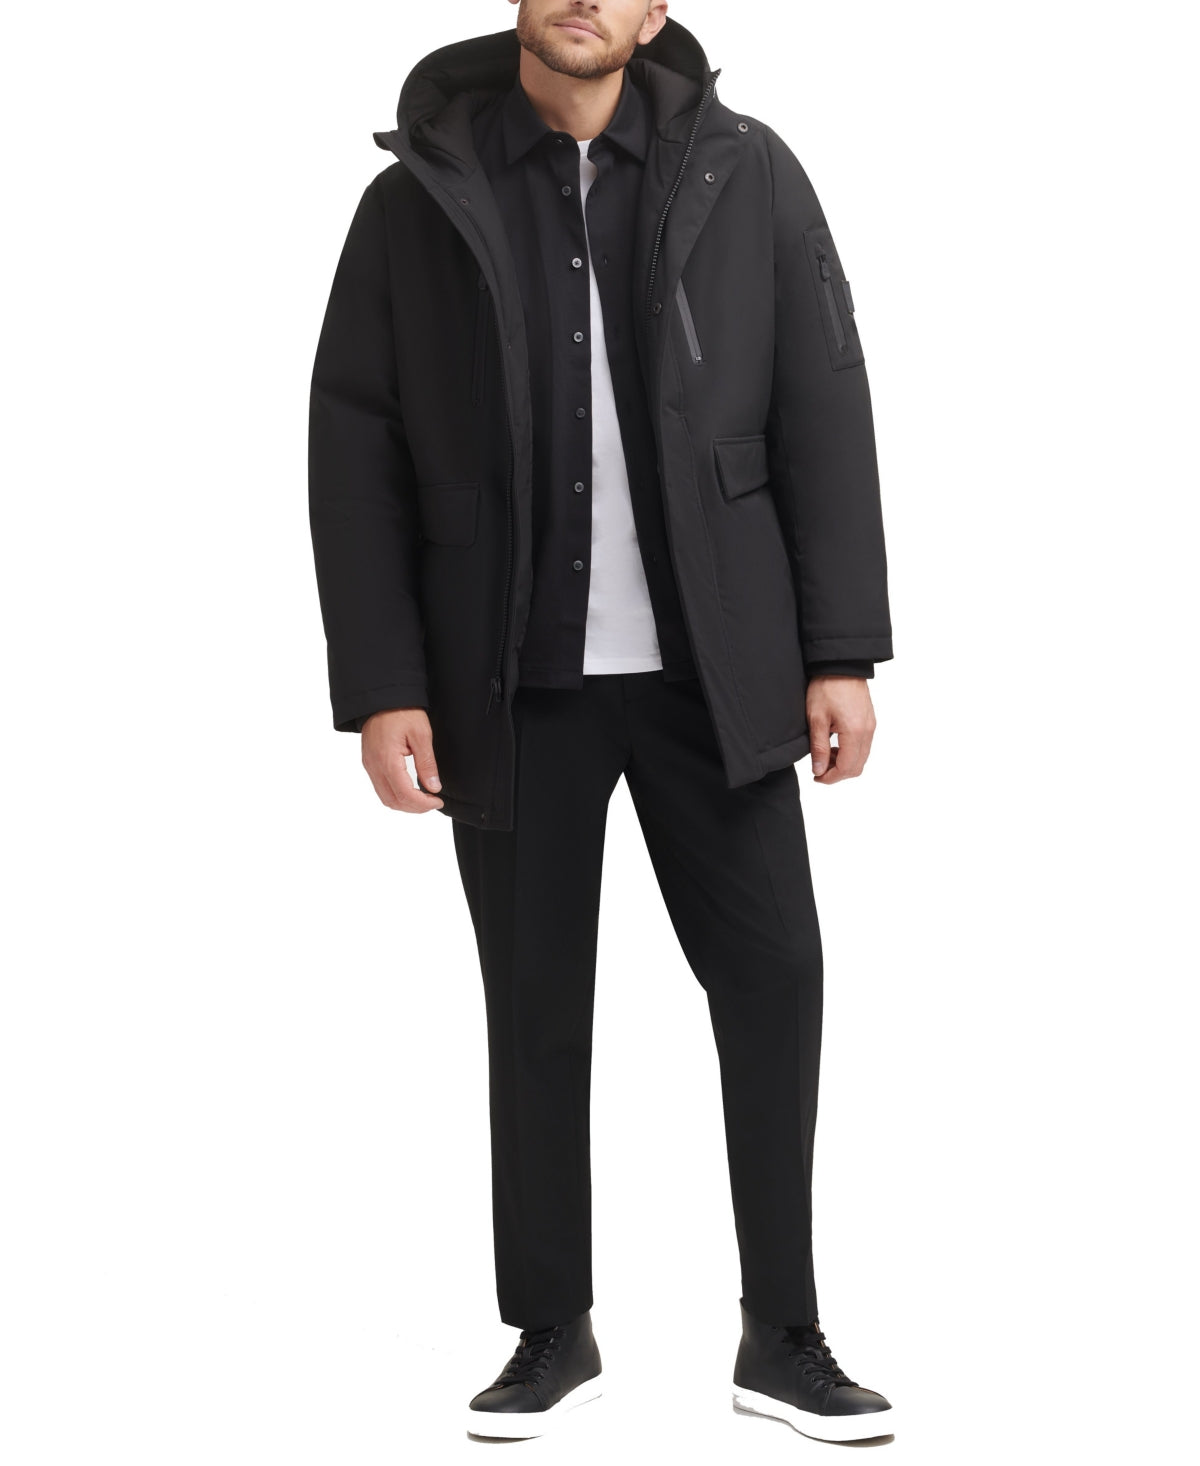 DKNY Men's Stretch Traveler Parka Jacket Coat Large Black